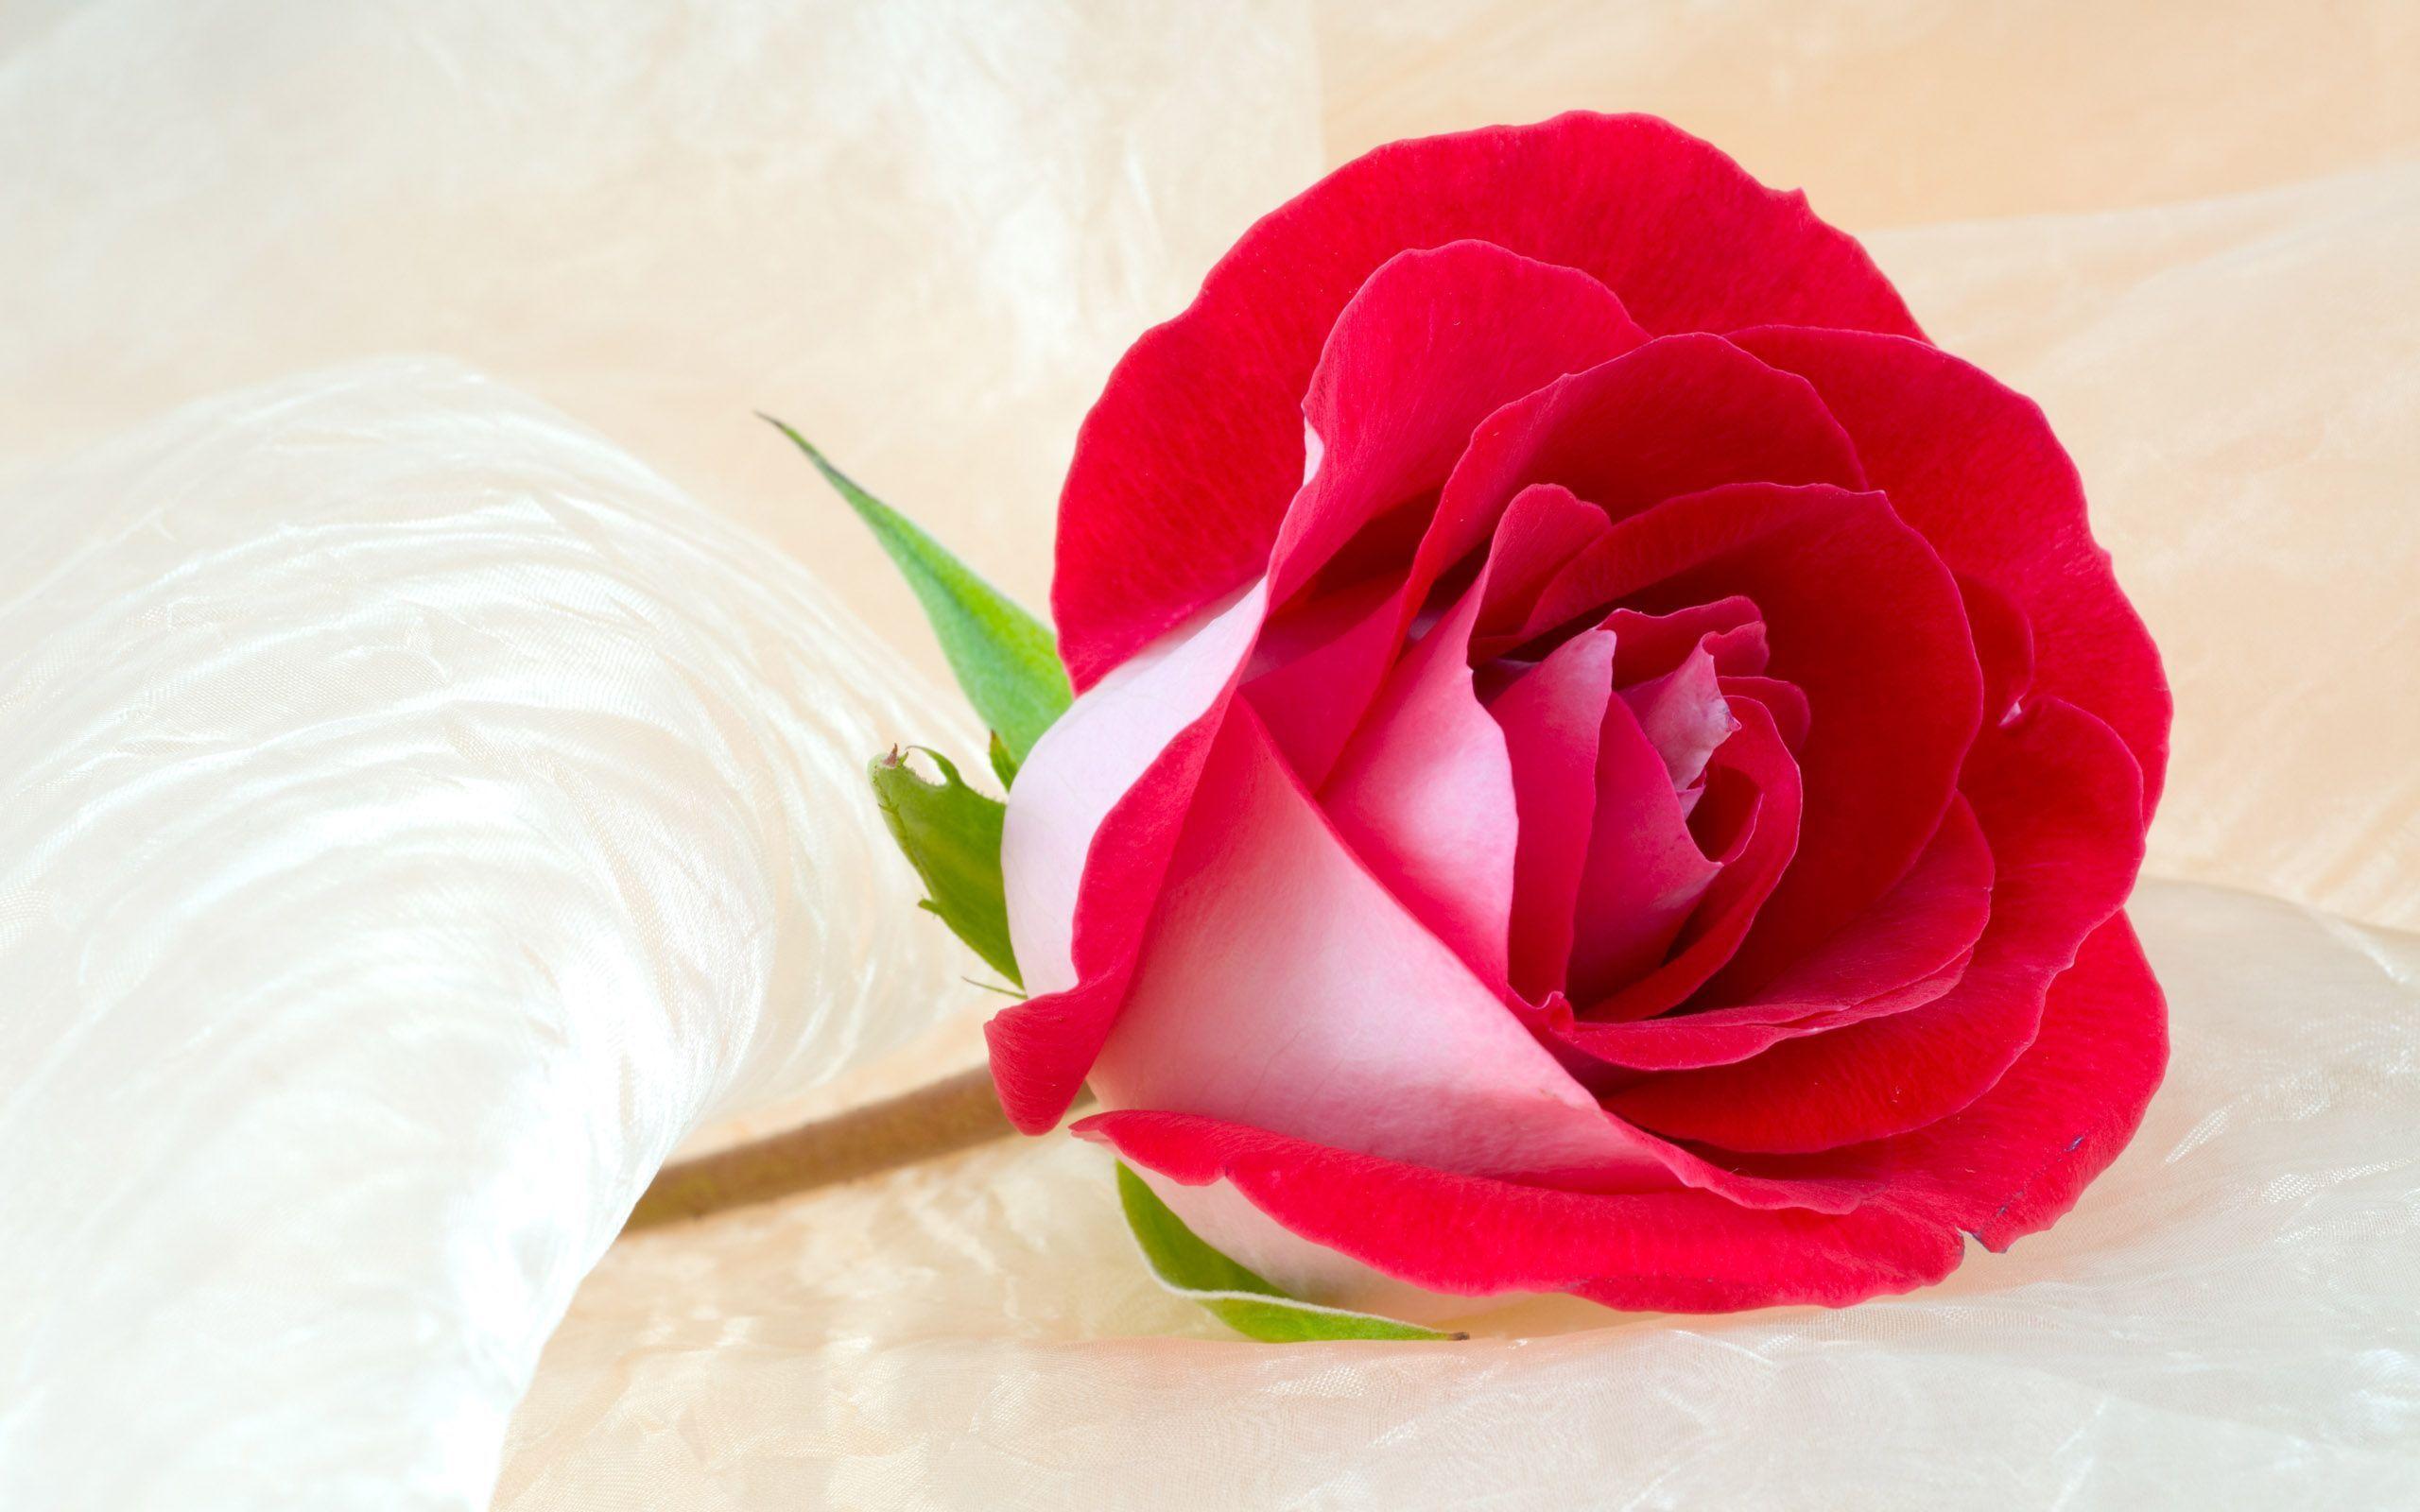 Rose Flower Image for Desktop. Free Desk Wallpaper